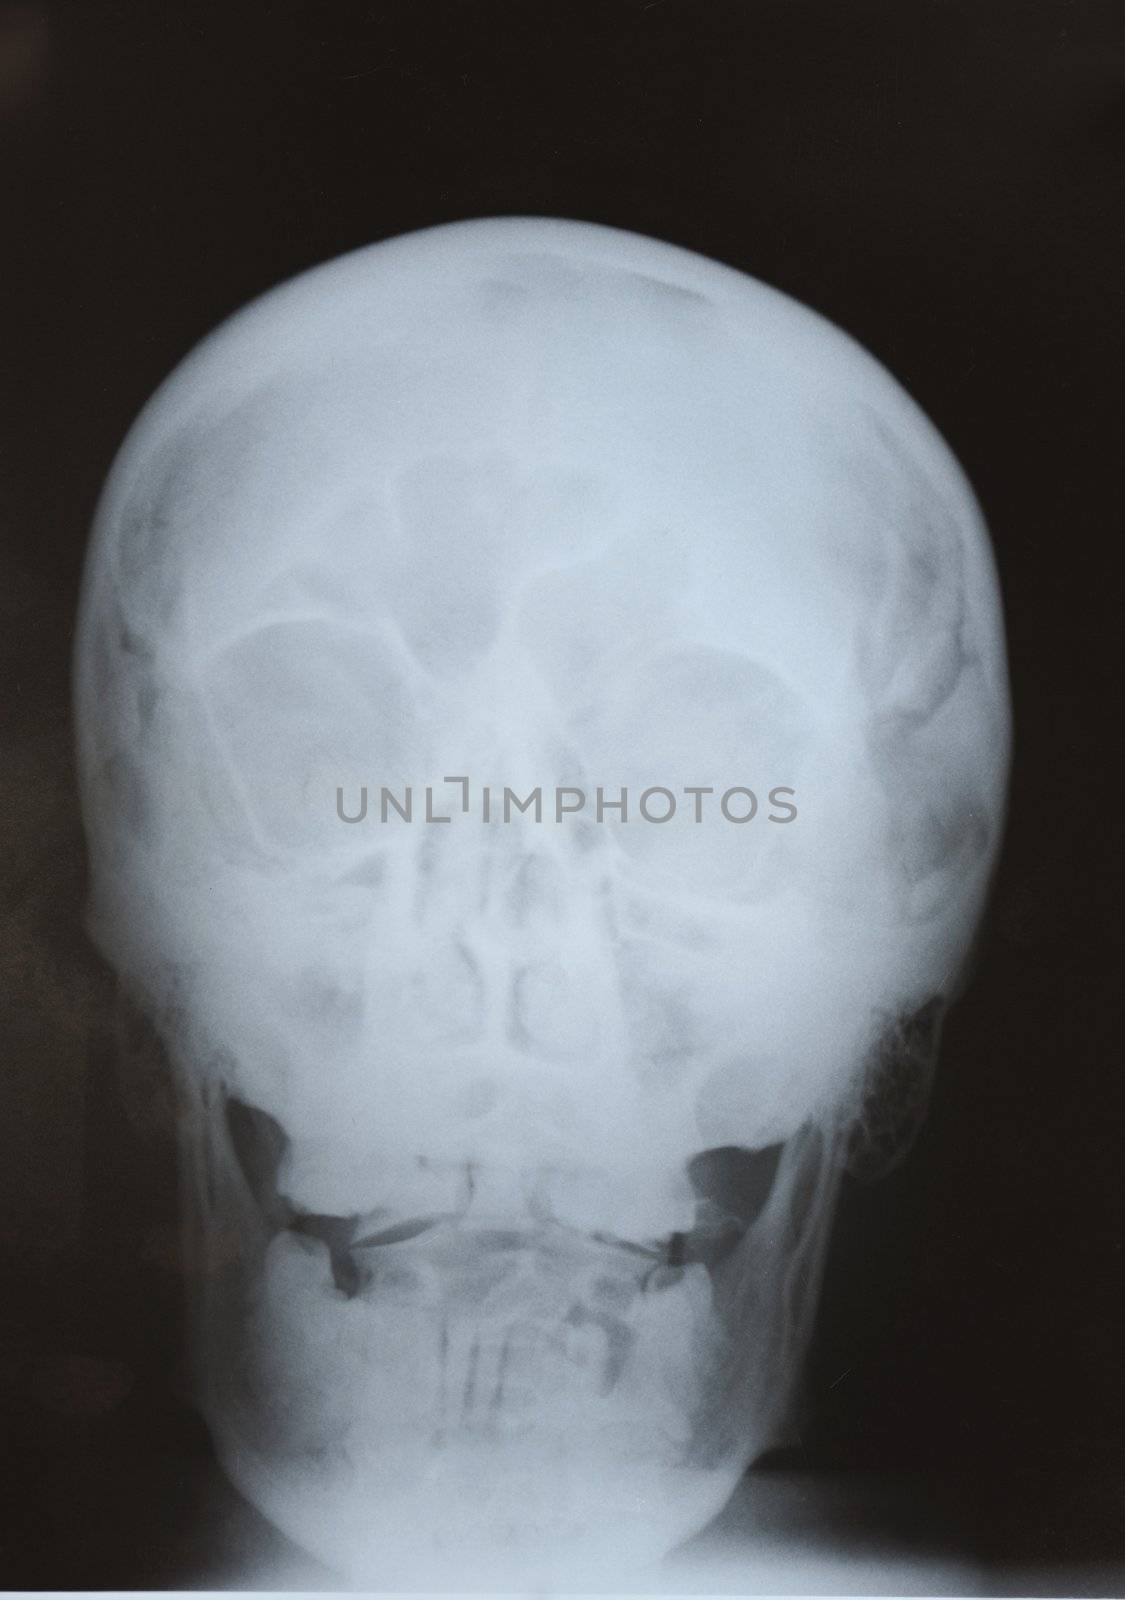 X-Ray skull shot close up